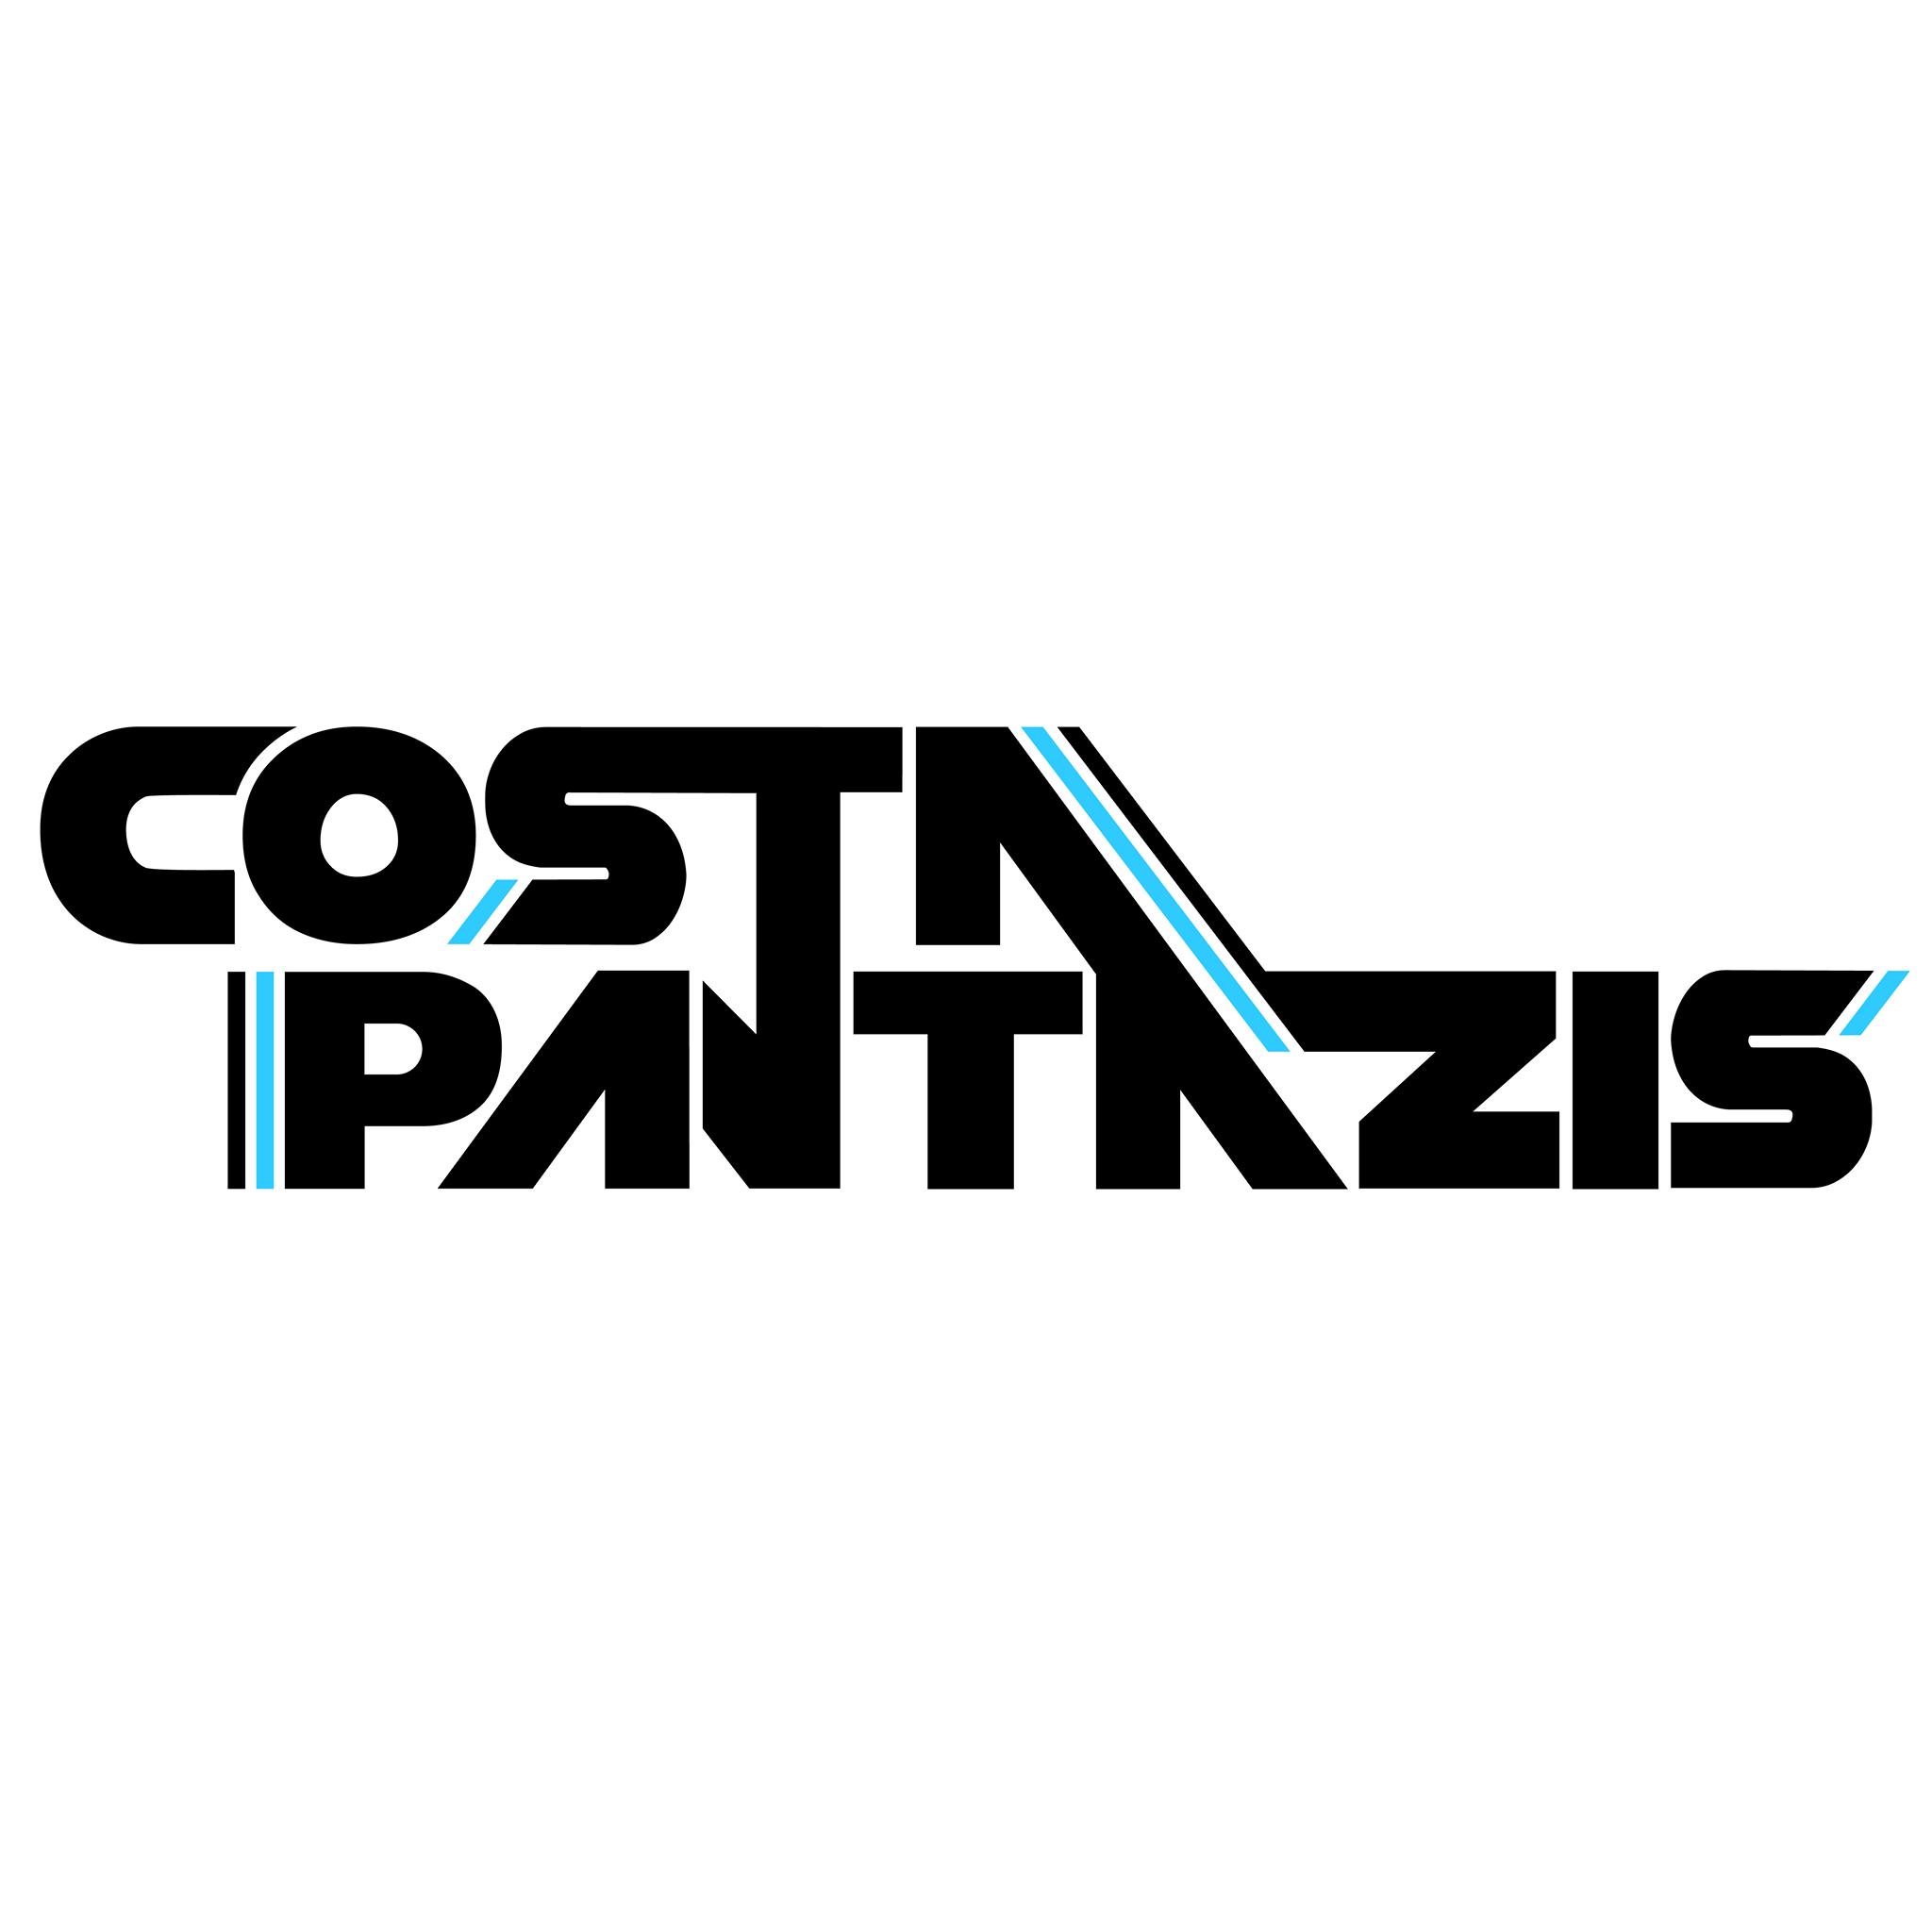 Costa Pantazis